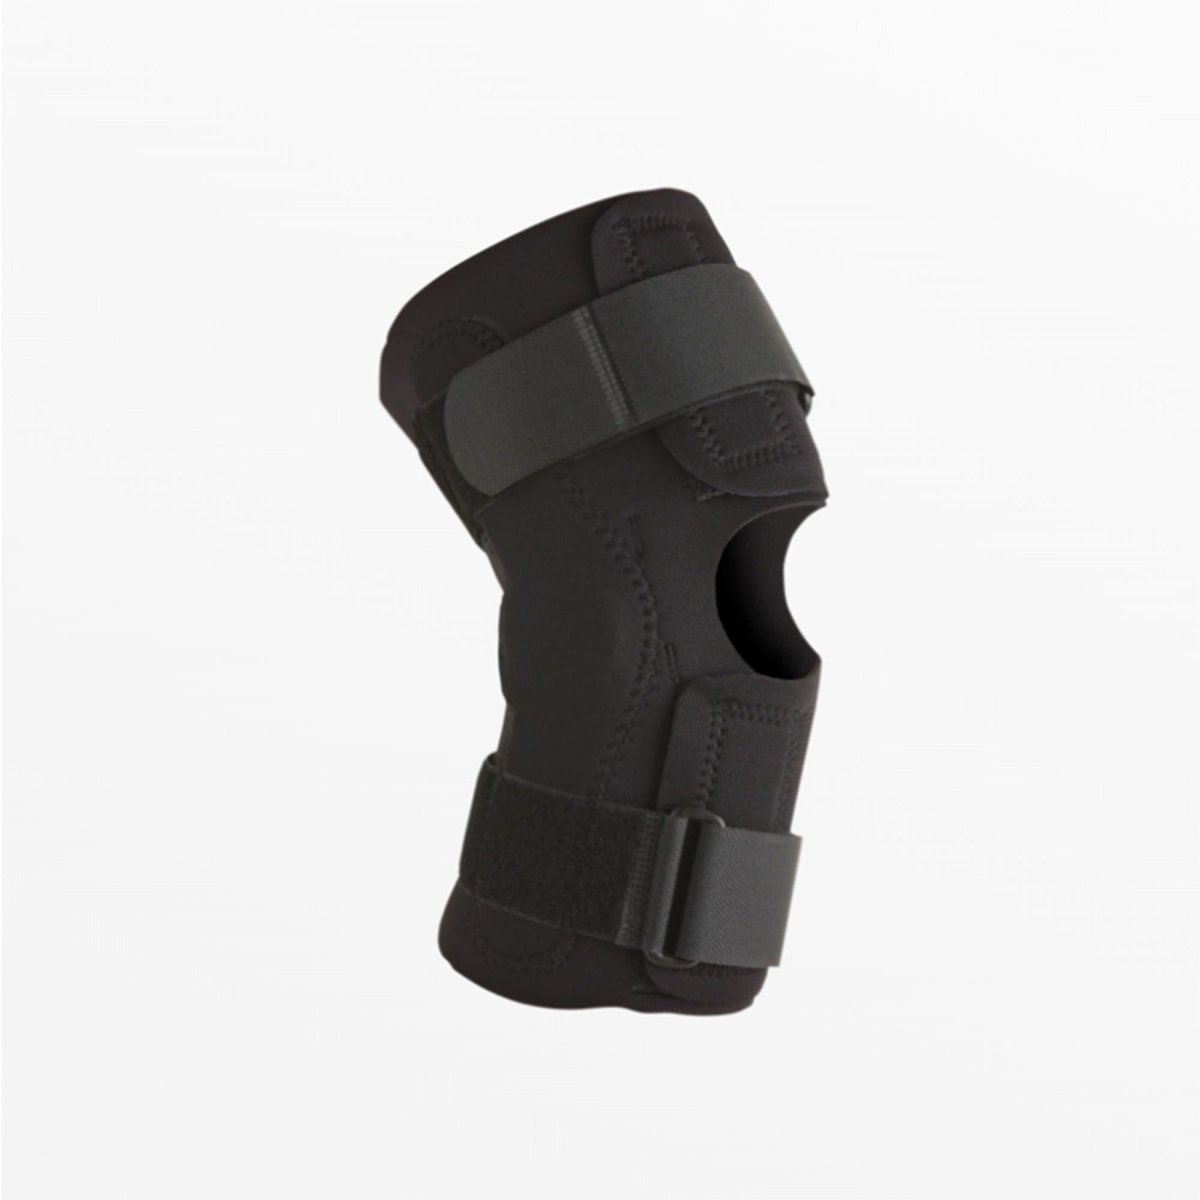 Ossur Neoprene Knee Support with Stabilized Patella - 302563-302569BLK-XXL - Brace Direct